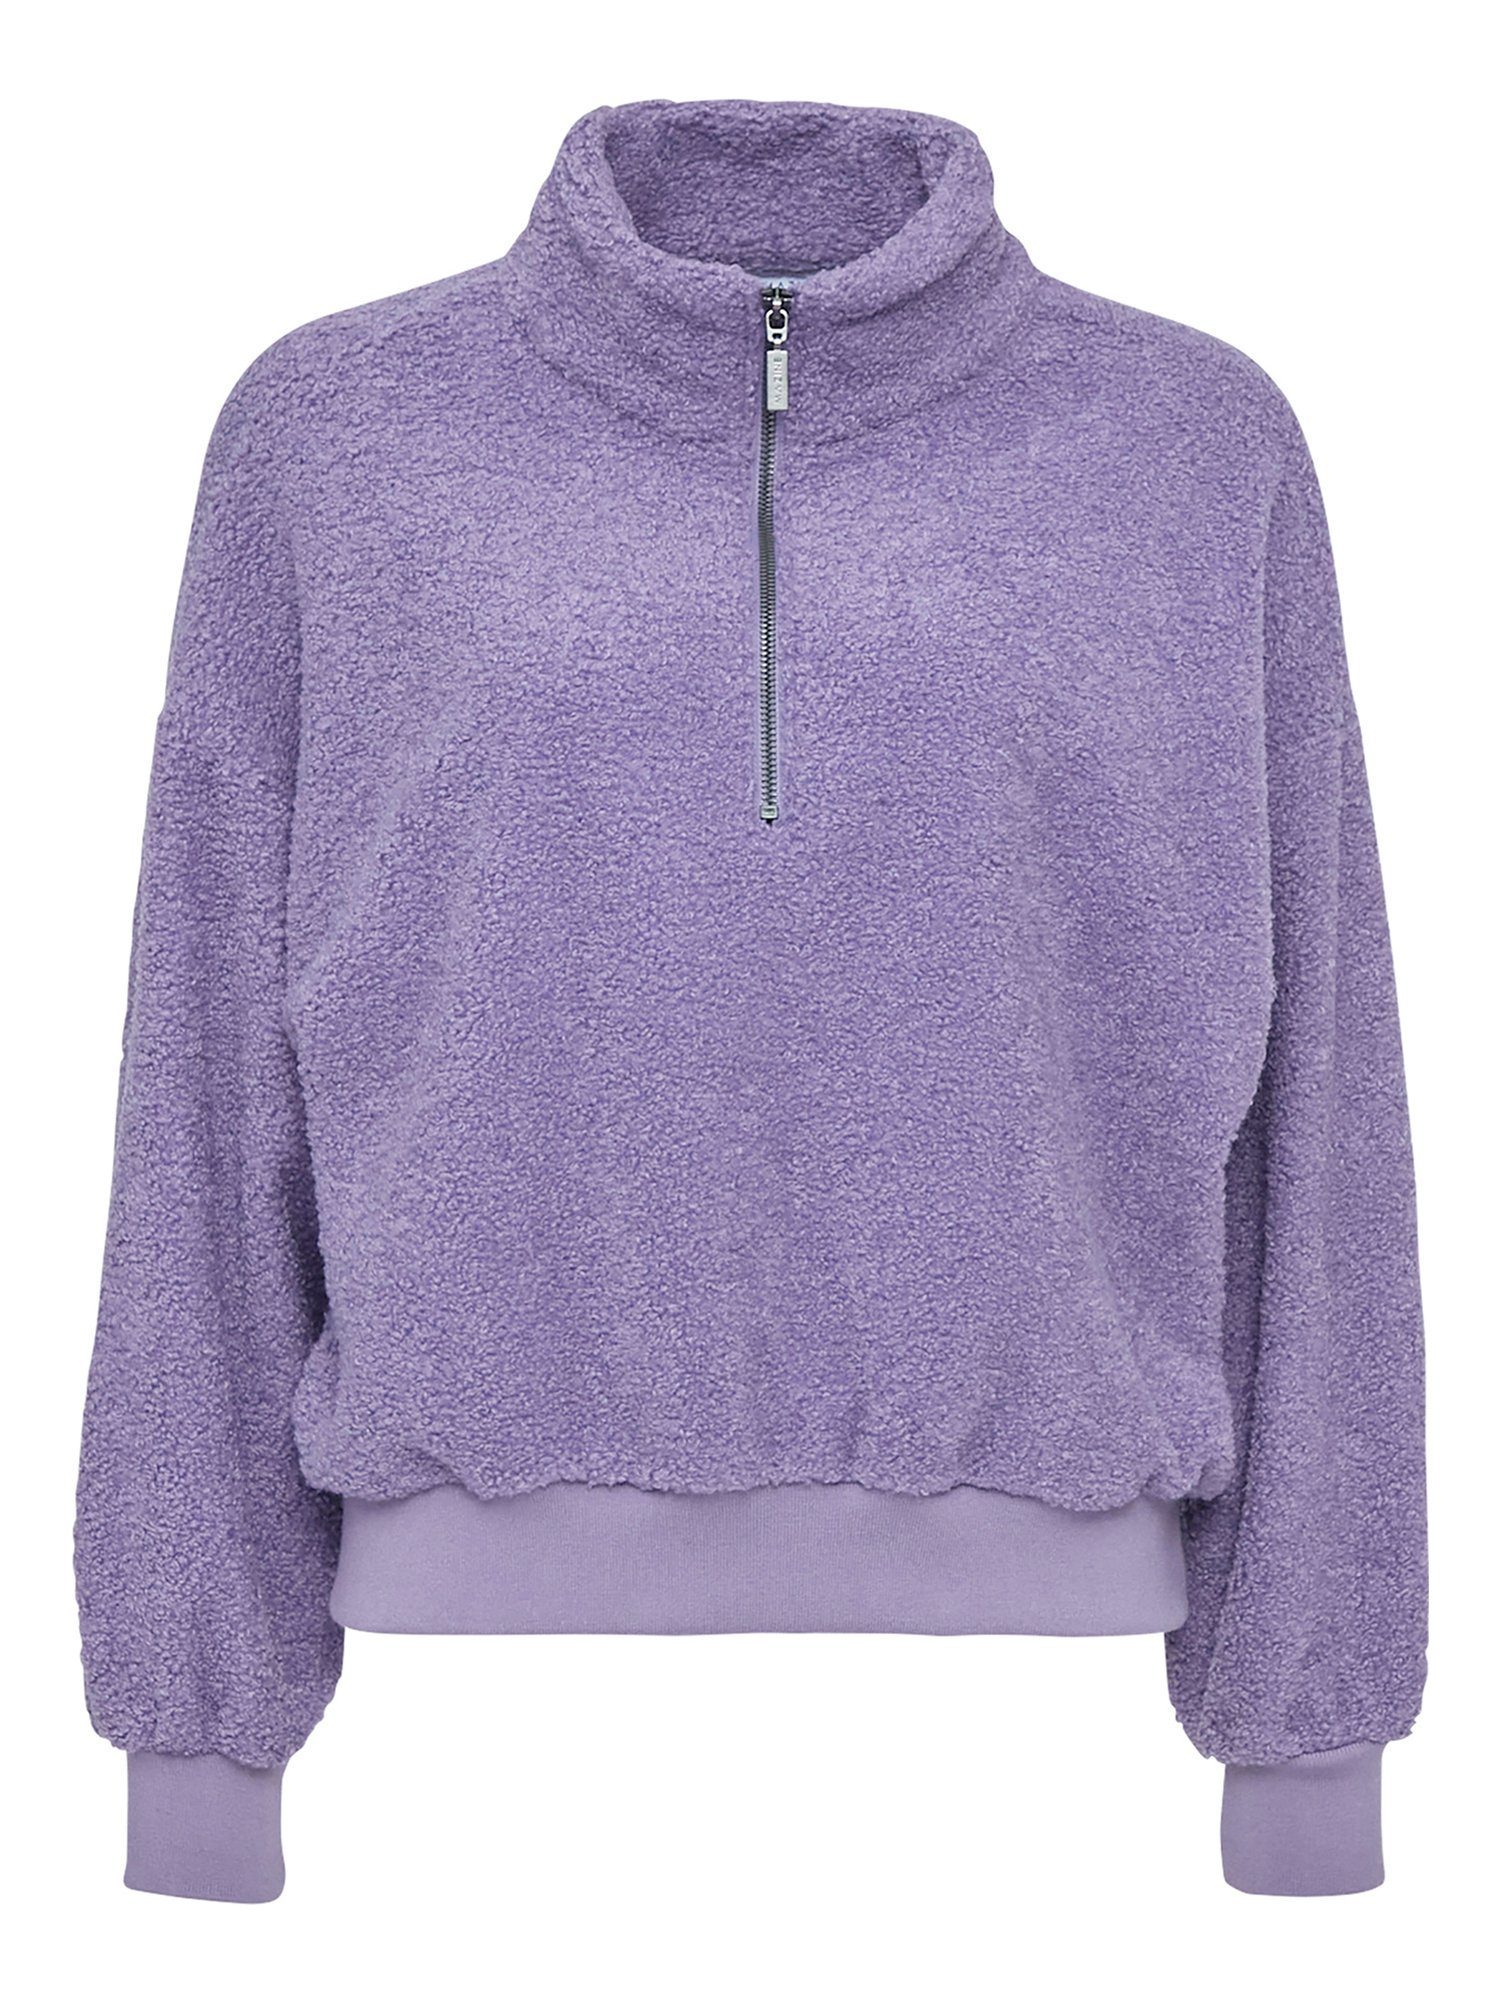 haze gemütlich purple Sweatshirt sportlich Half Ajo Zip MAZINE